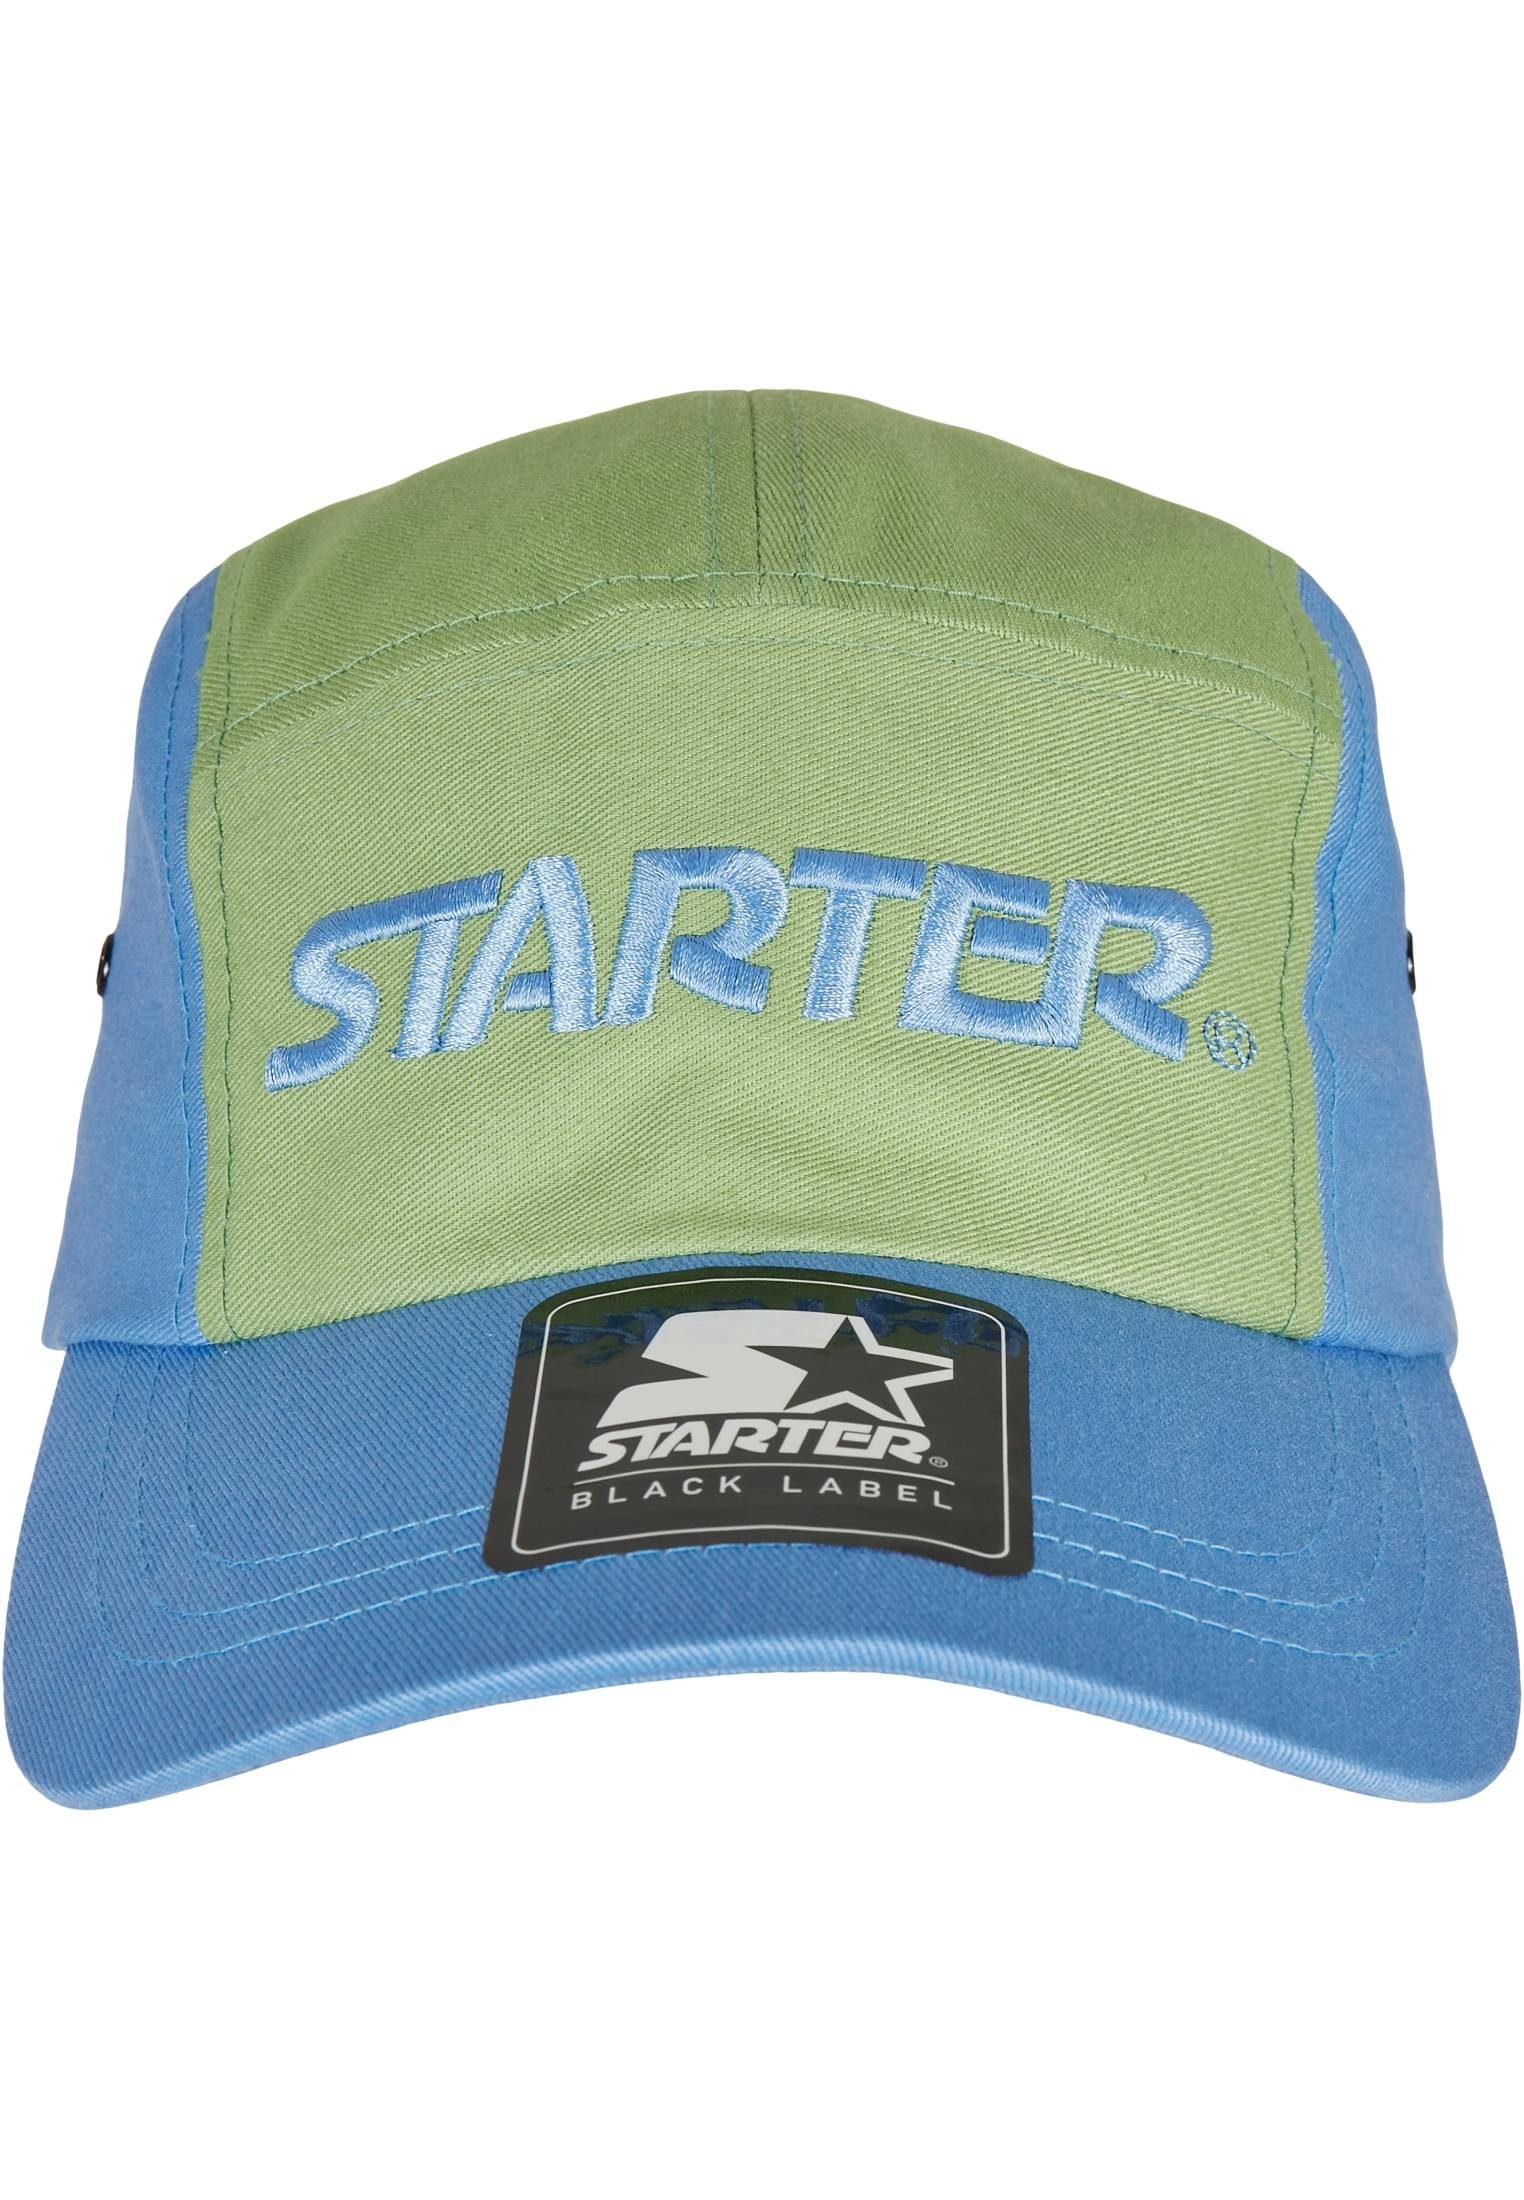 Starter Black Label Snapback Cap Accessoires Fresh Jockey Cap jadegreen/horizonblue